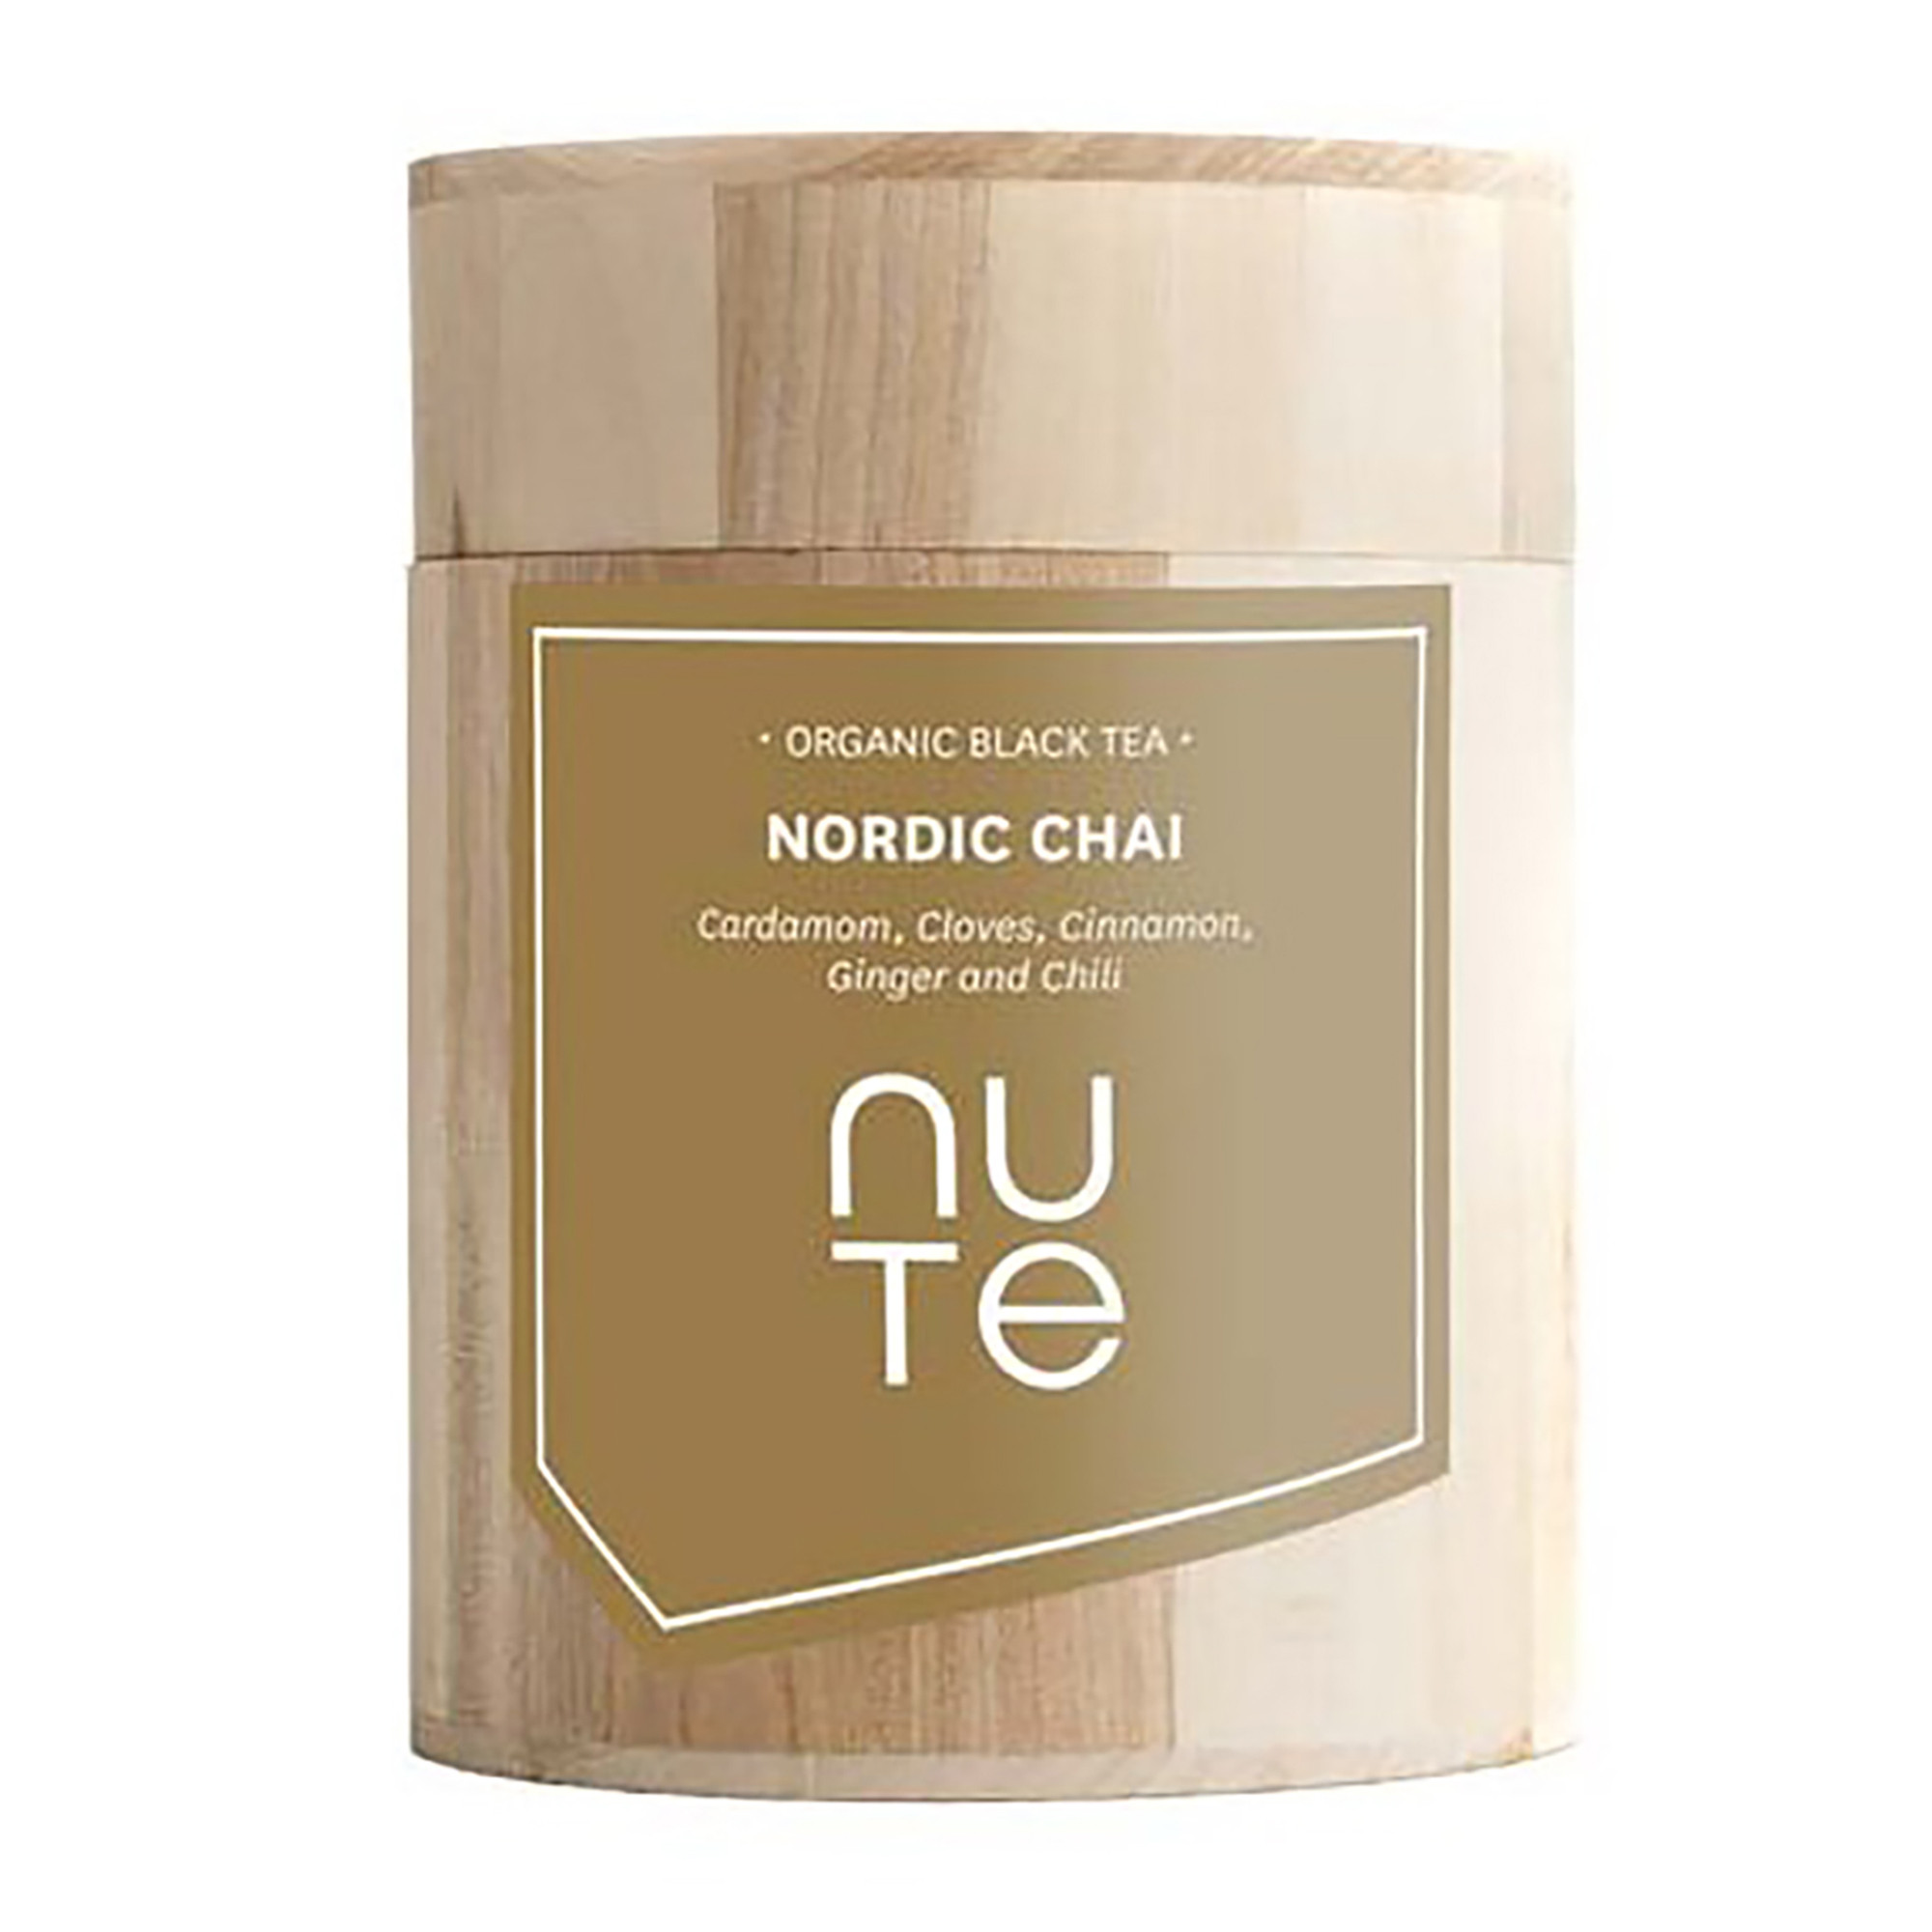 Nordic Chai - NUTE - 100 gram thumbnail